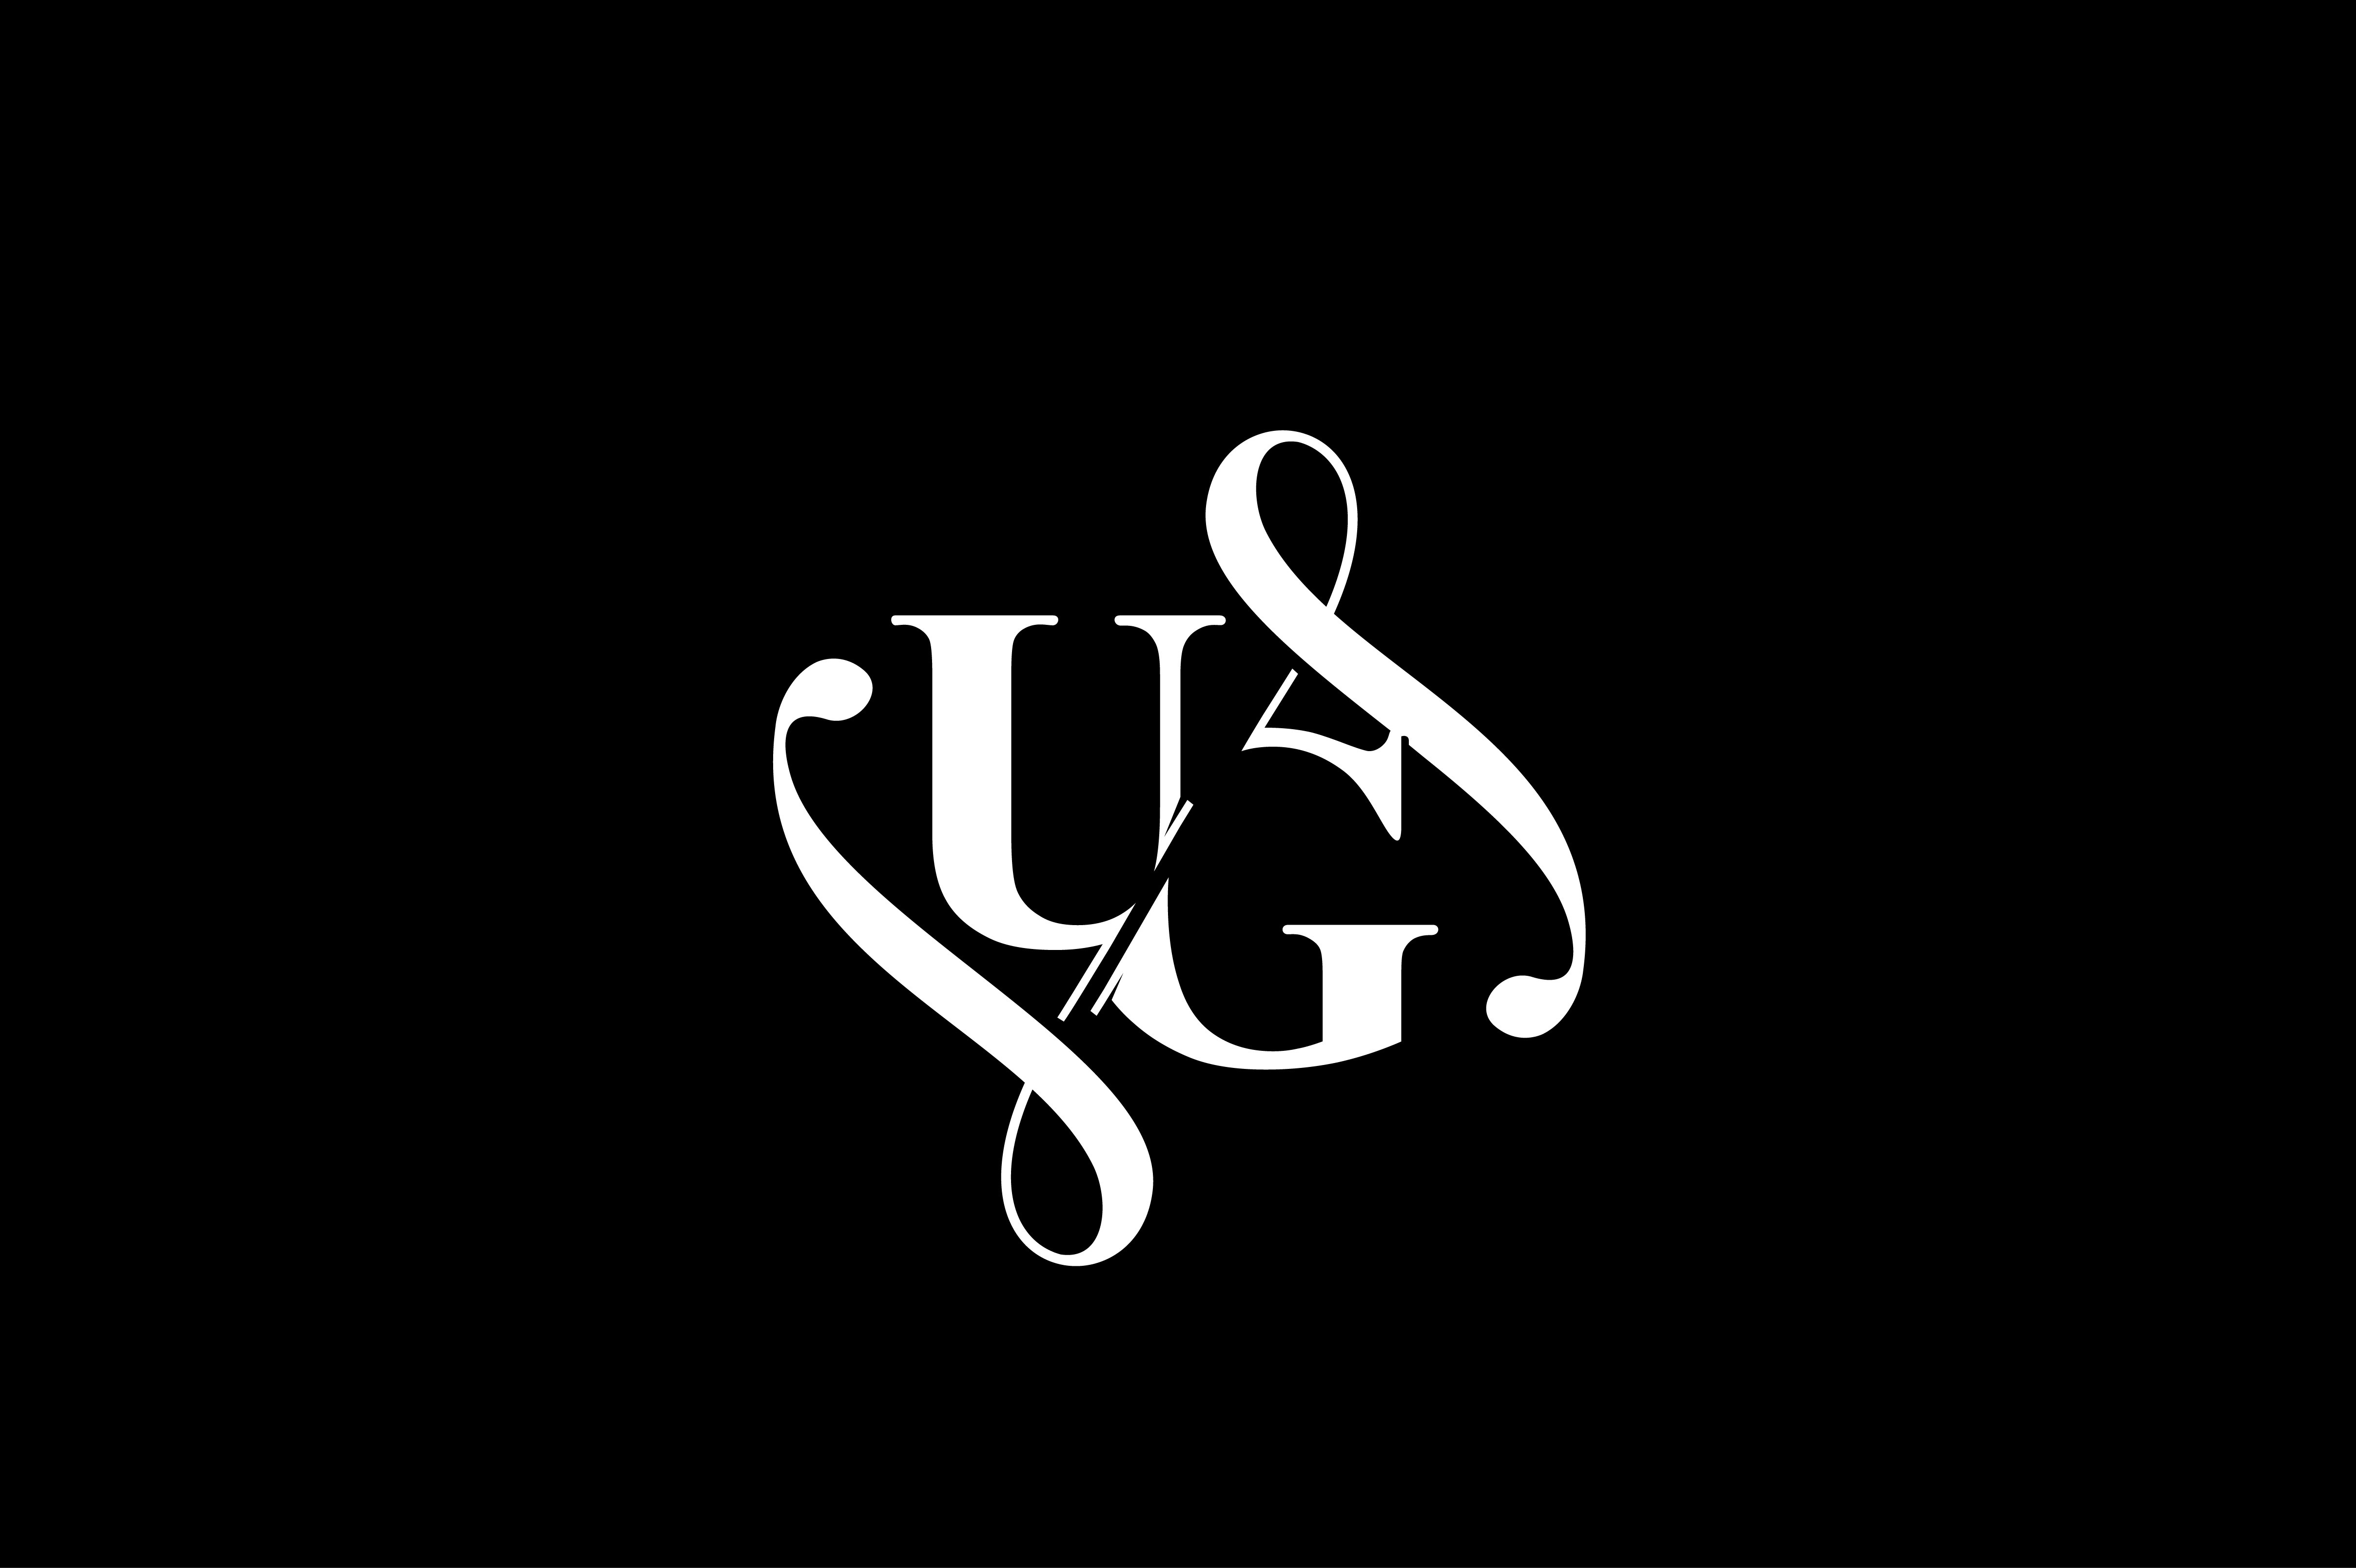 YL Monogram Logo Design V6 Graphic by Greenlines Studios · Creative Fabrica